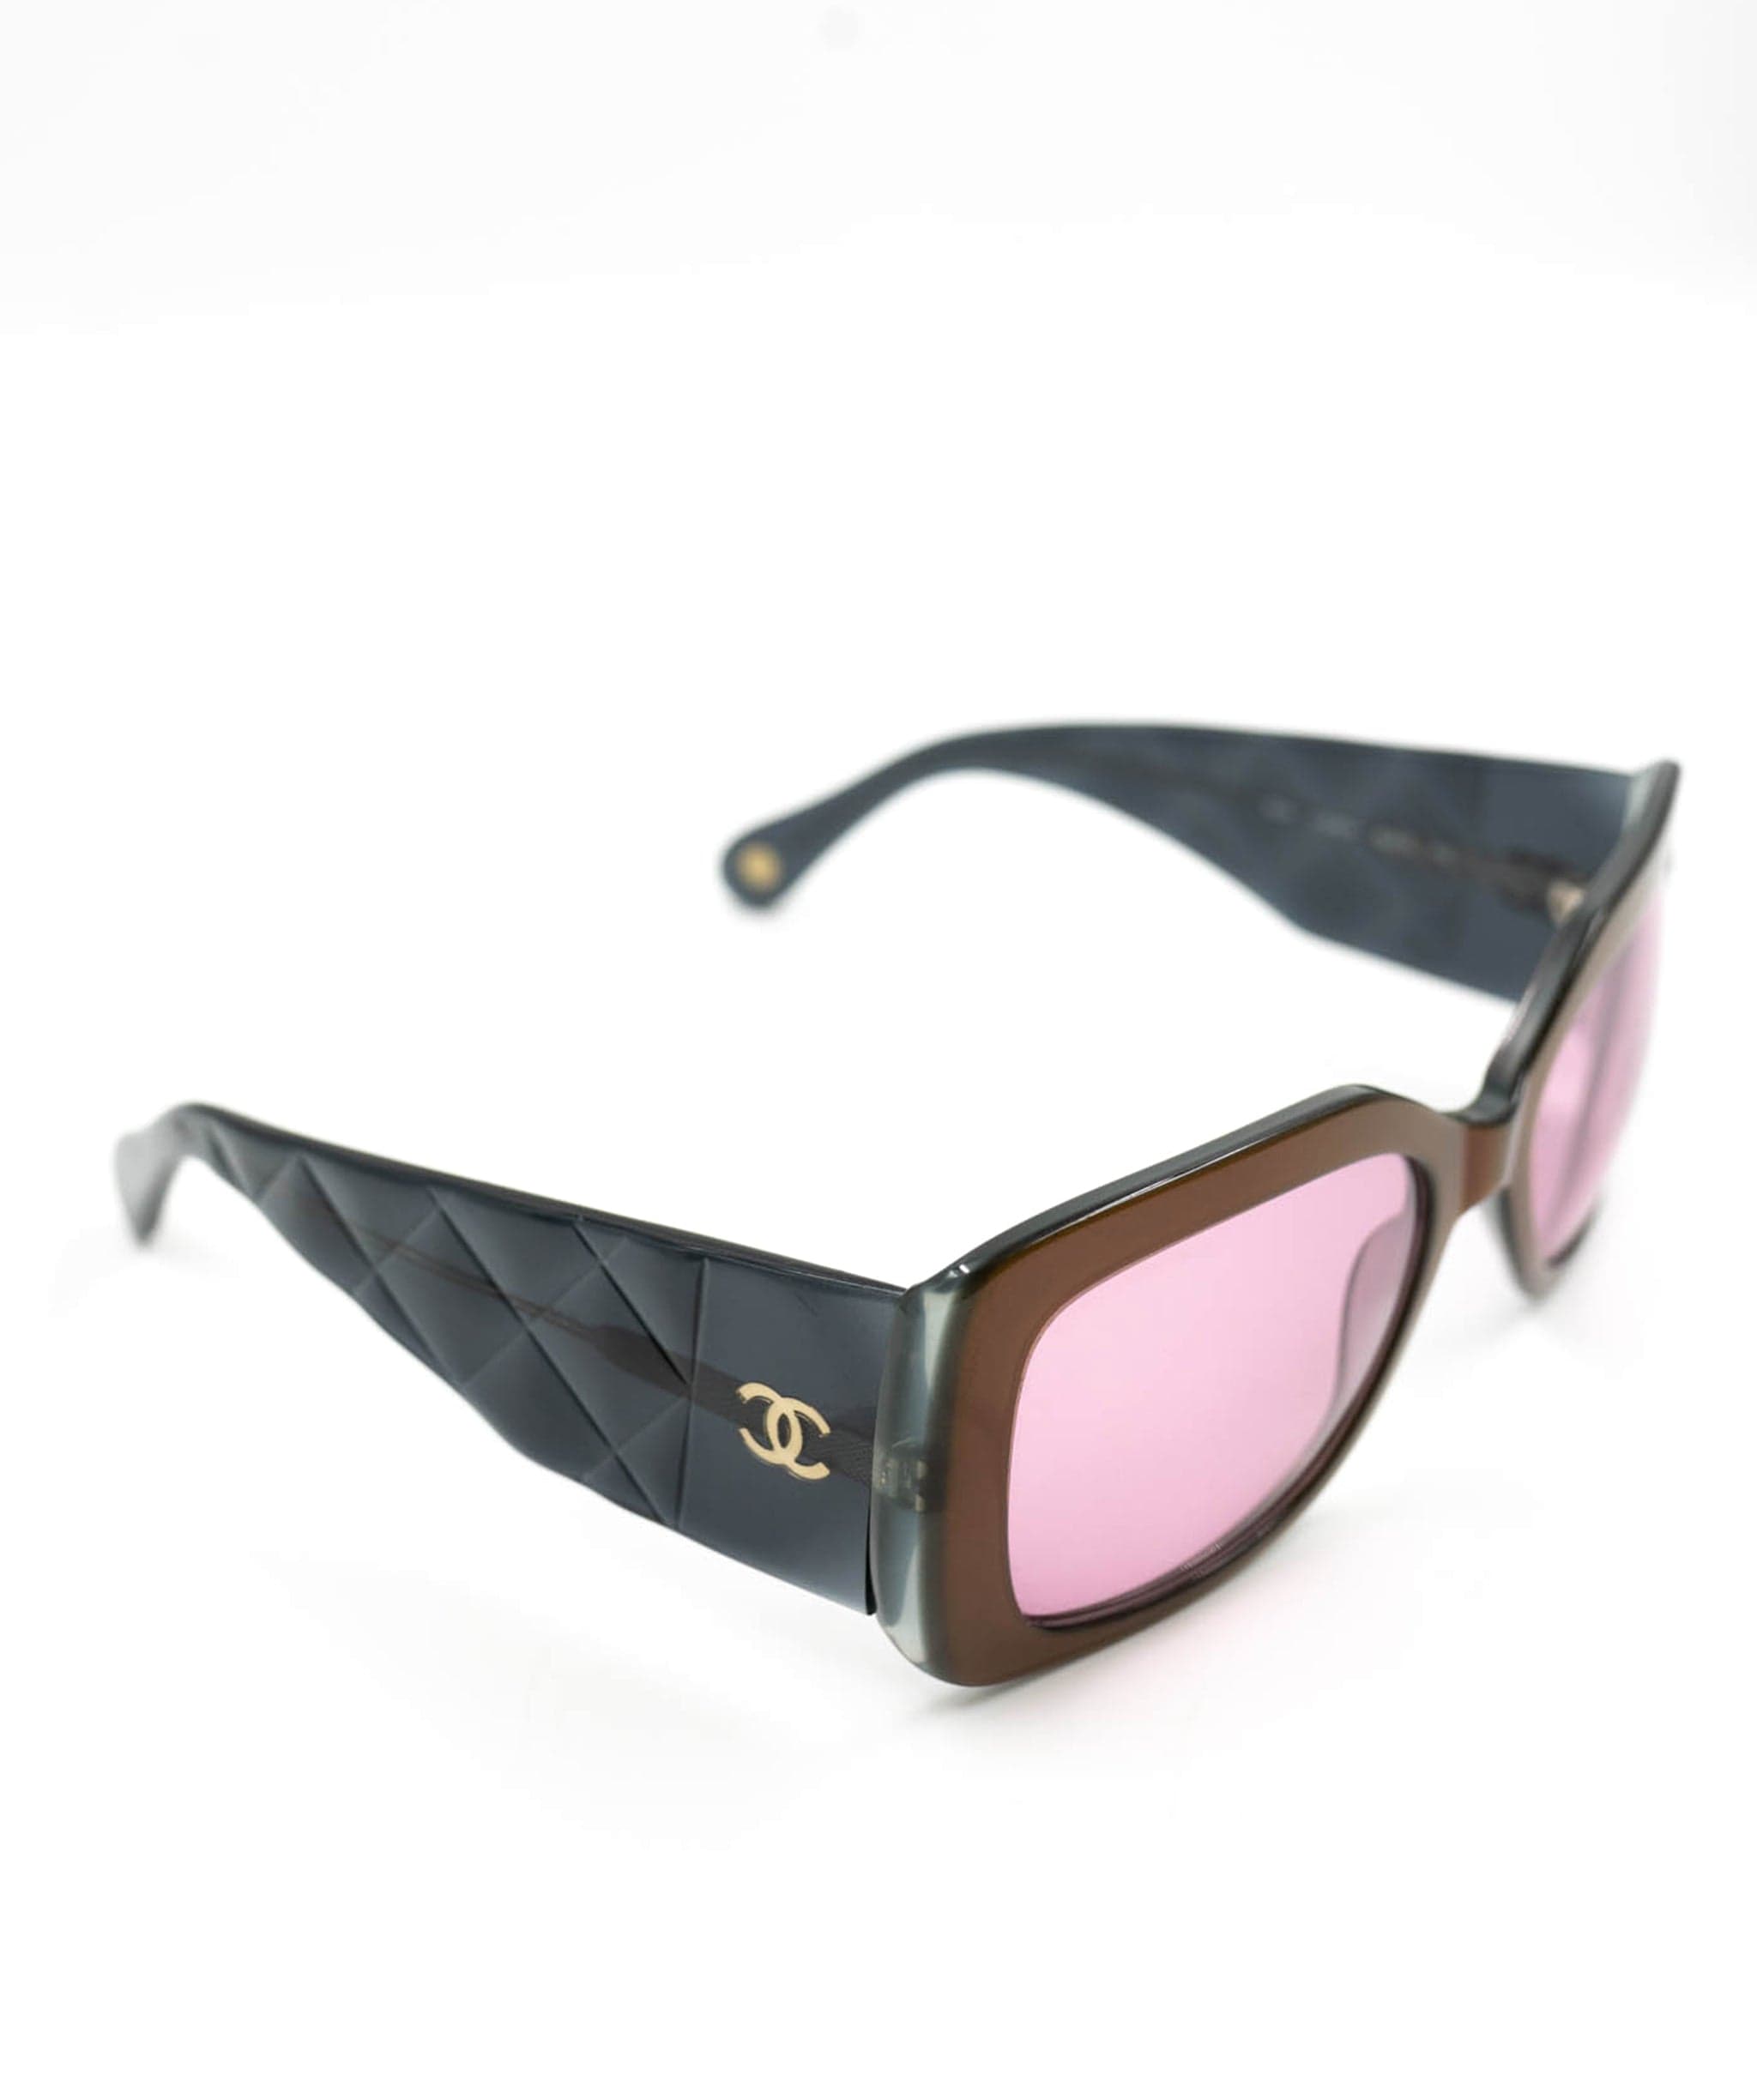 Chanel Chanel Vintage sunglasses - AWL3800